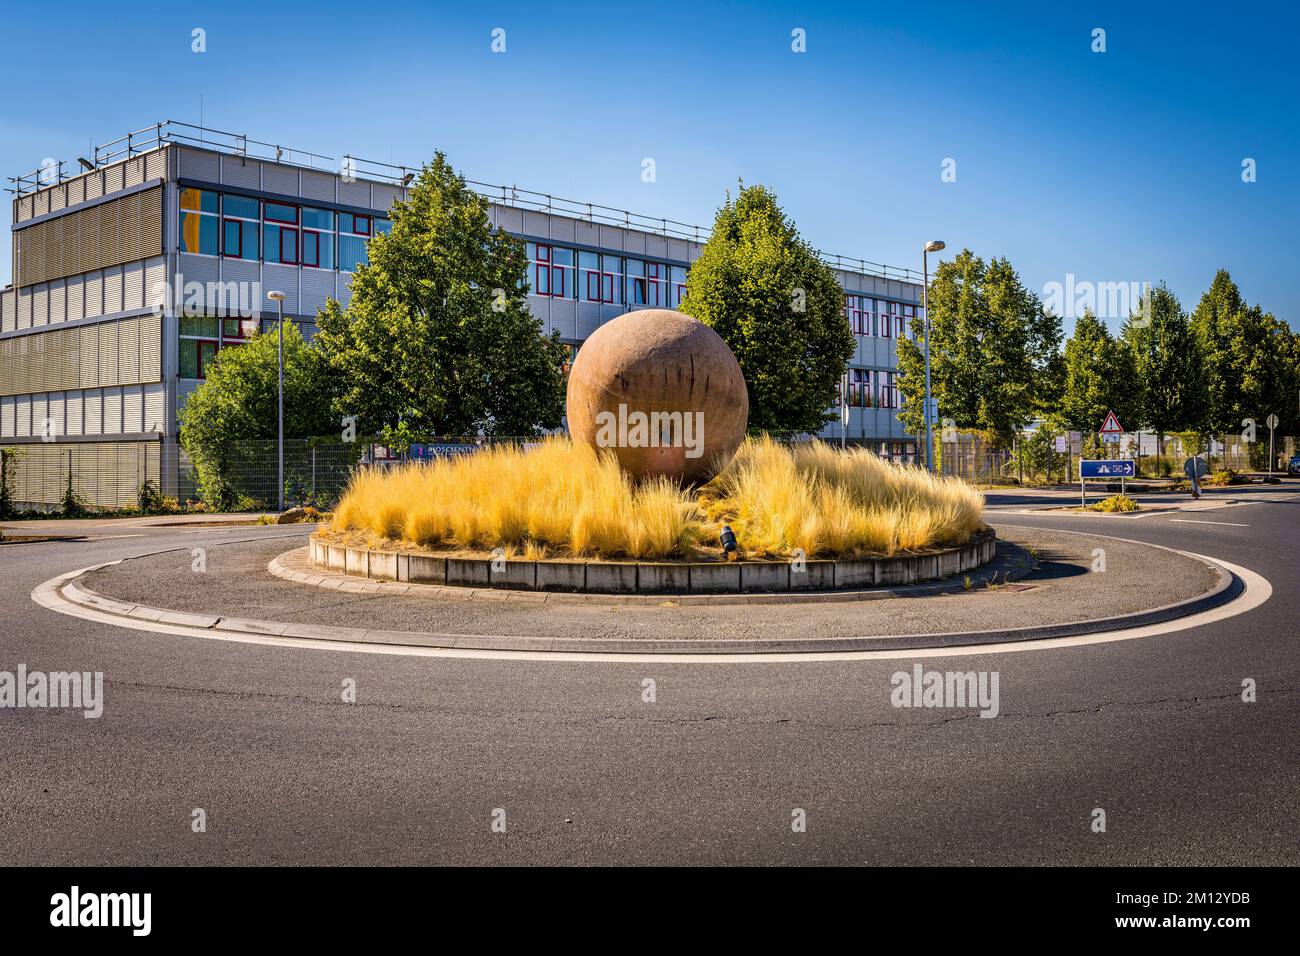 Cerchio di traffico di mele a Ingelheim, arte nel cerchio di traffico con 18 tonnellate di mela pesante in pietra arenaria con 5m di diametro Foto Stock